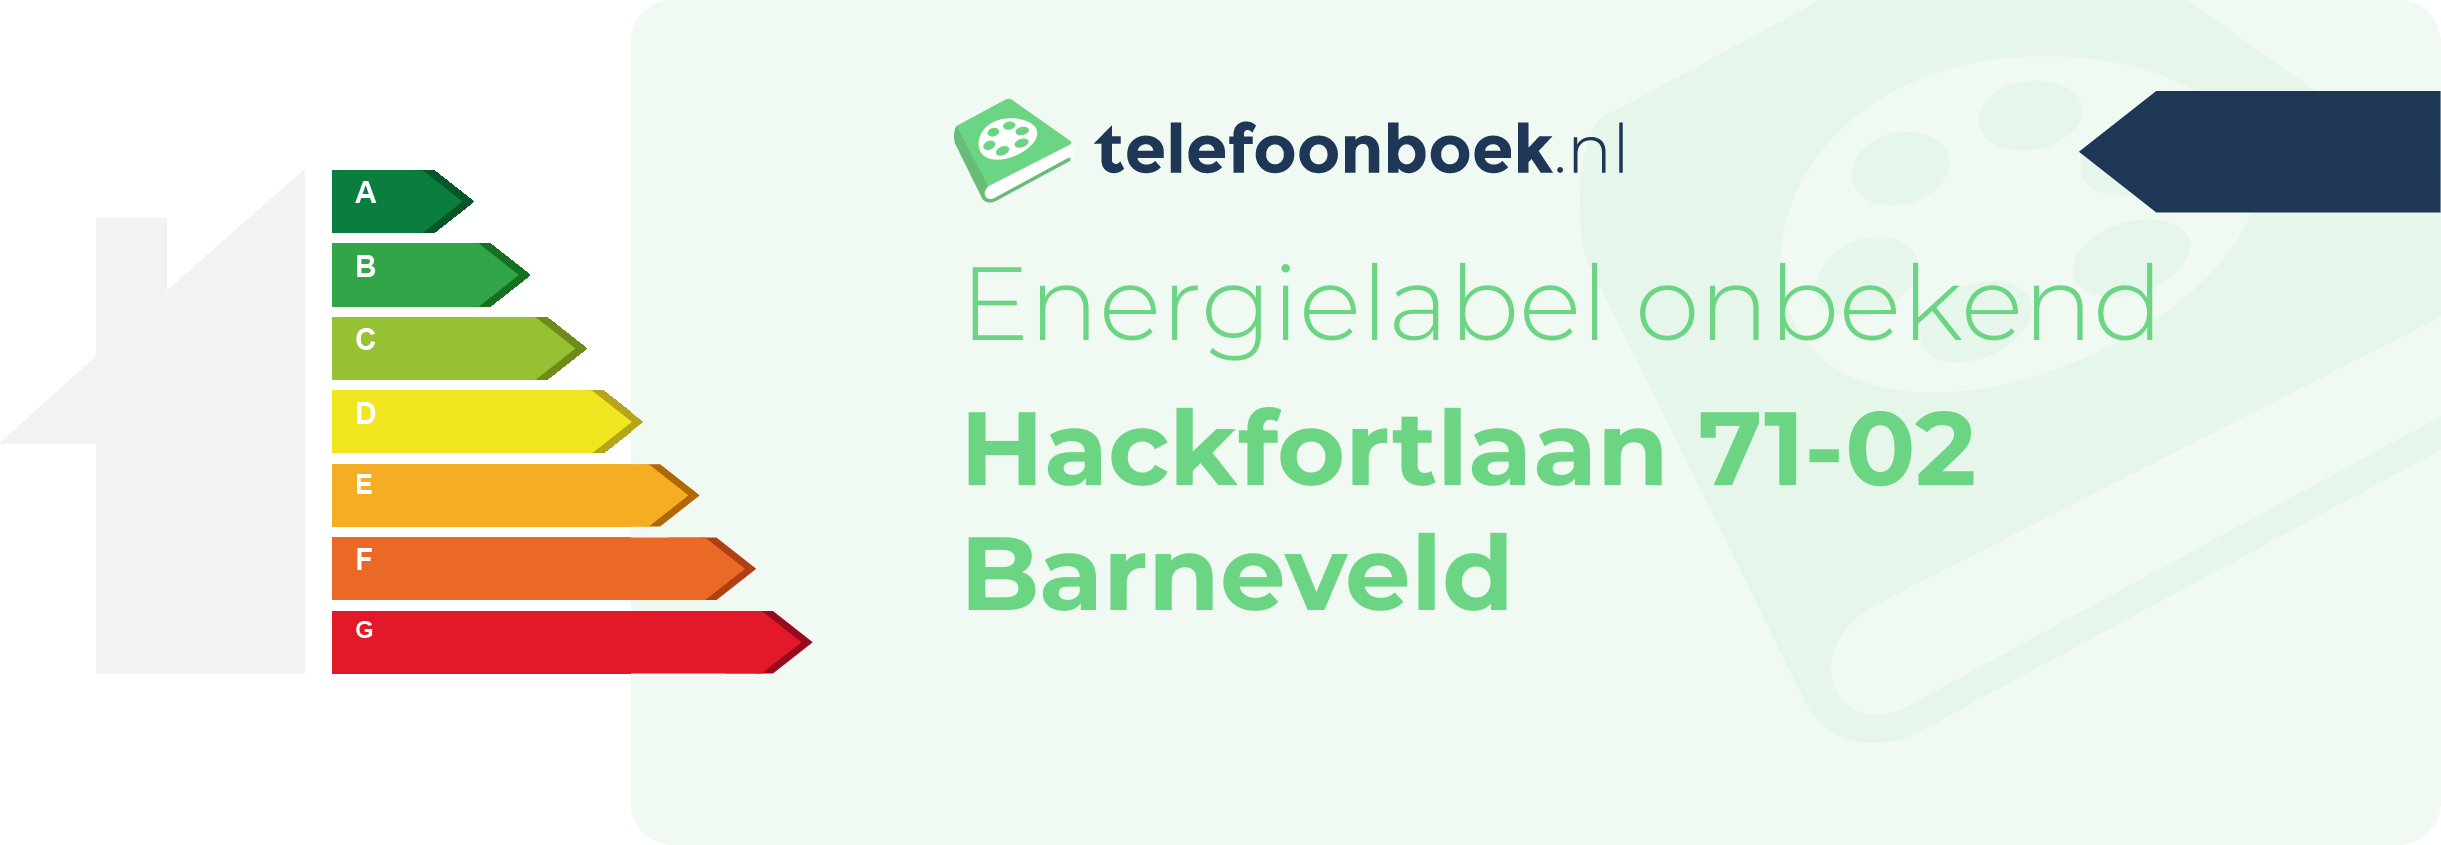 Energielabel Hackfortlaan 71-02 Barneveld